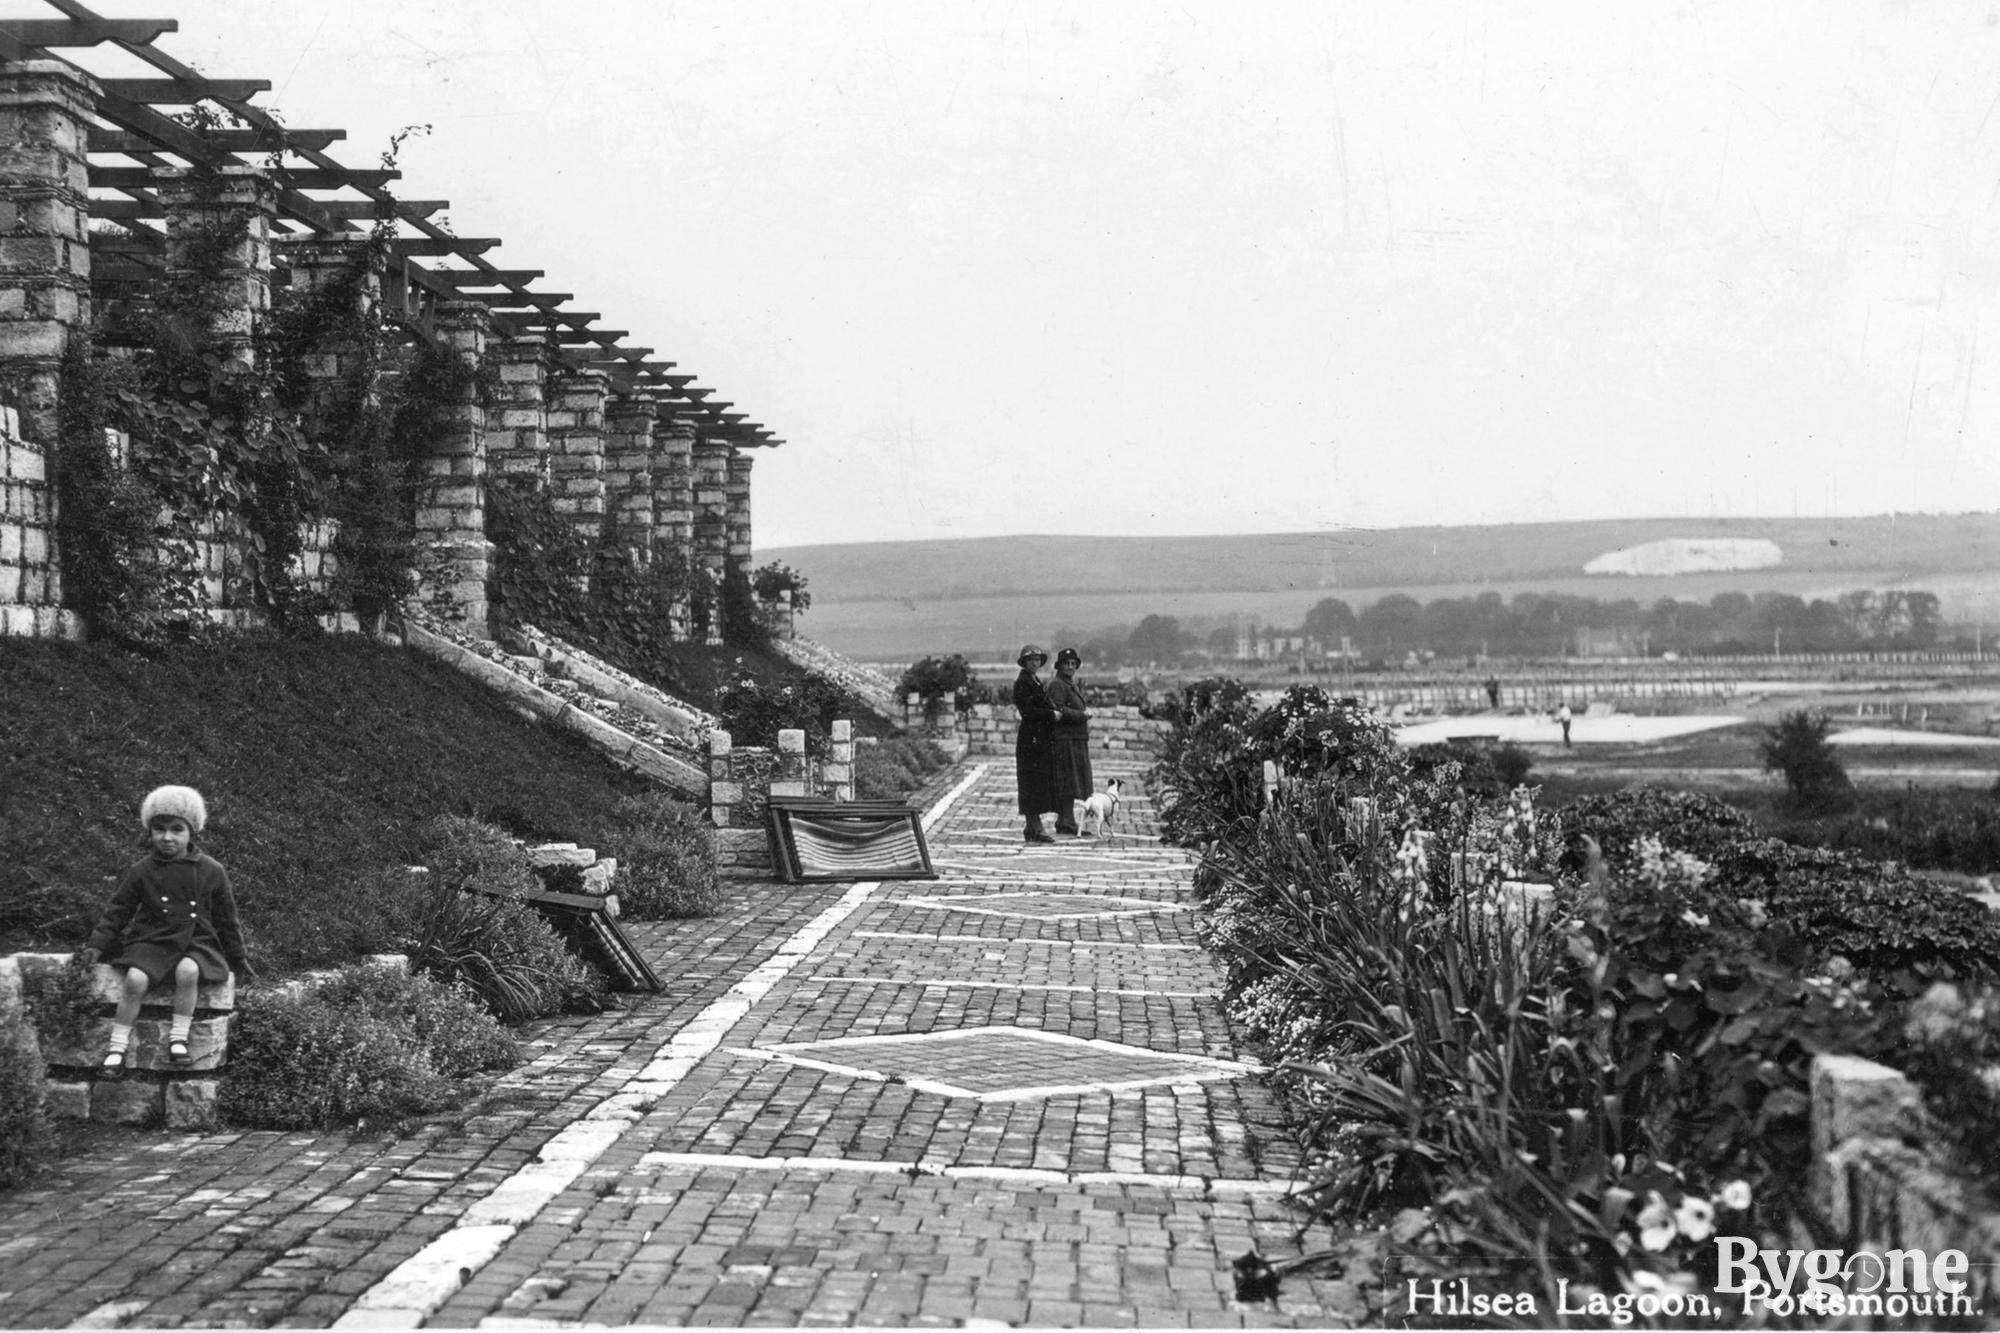 Hilsea Lagoon, circa 1934